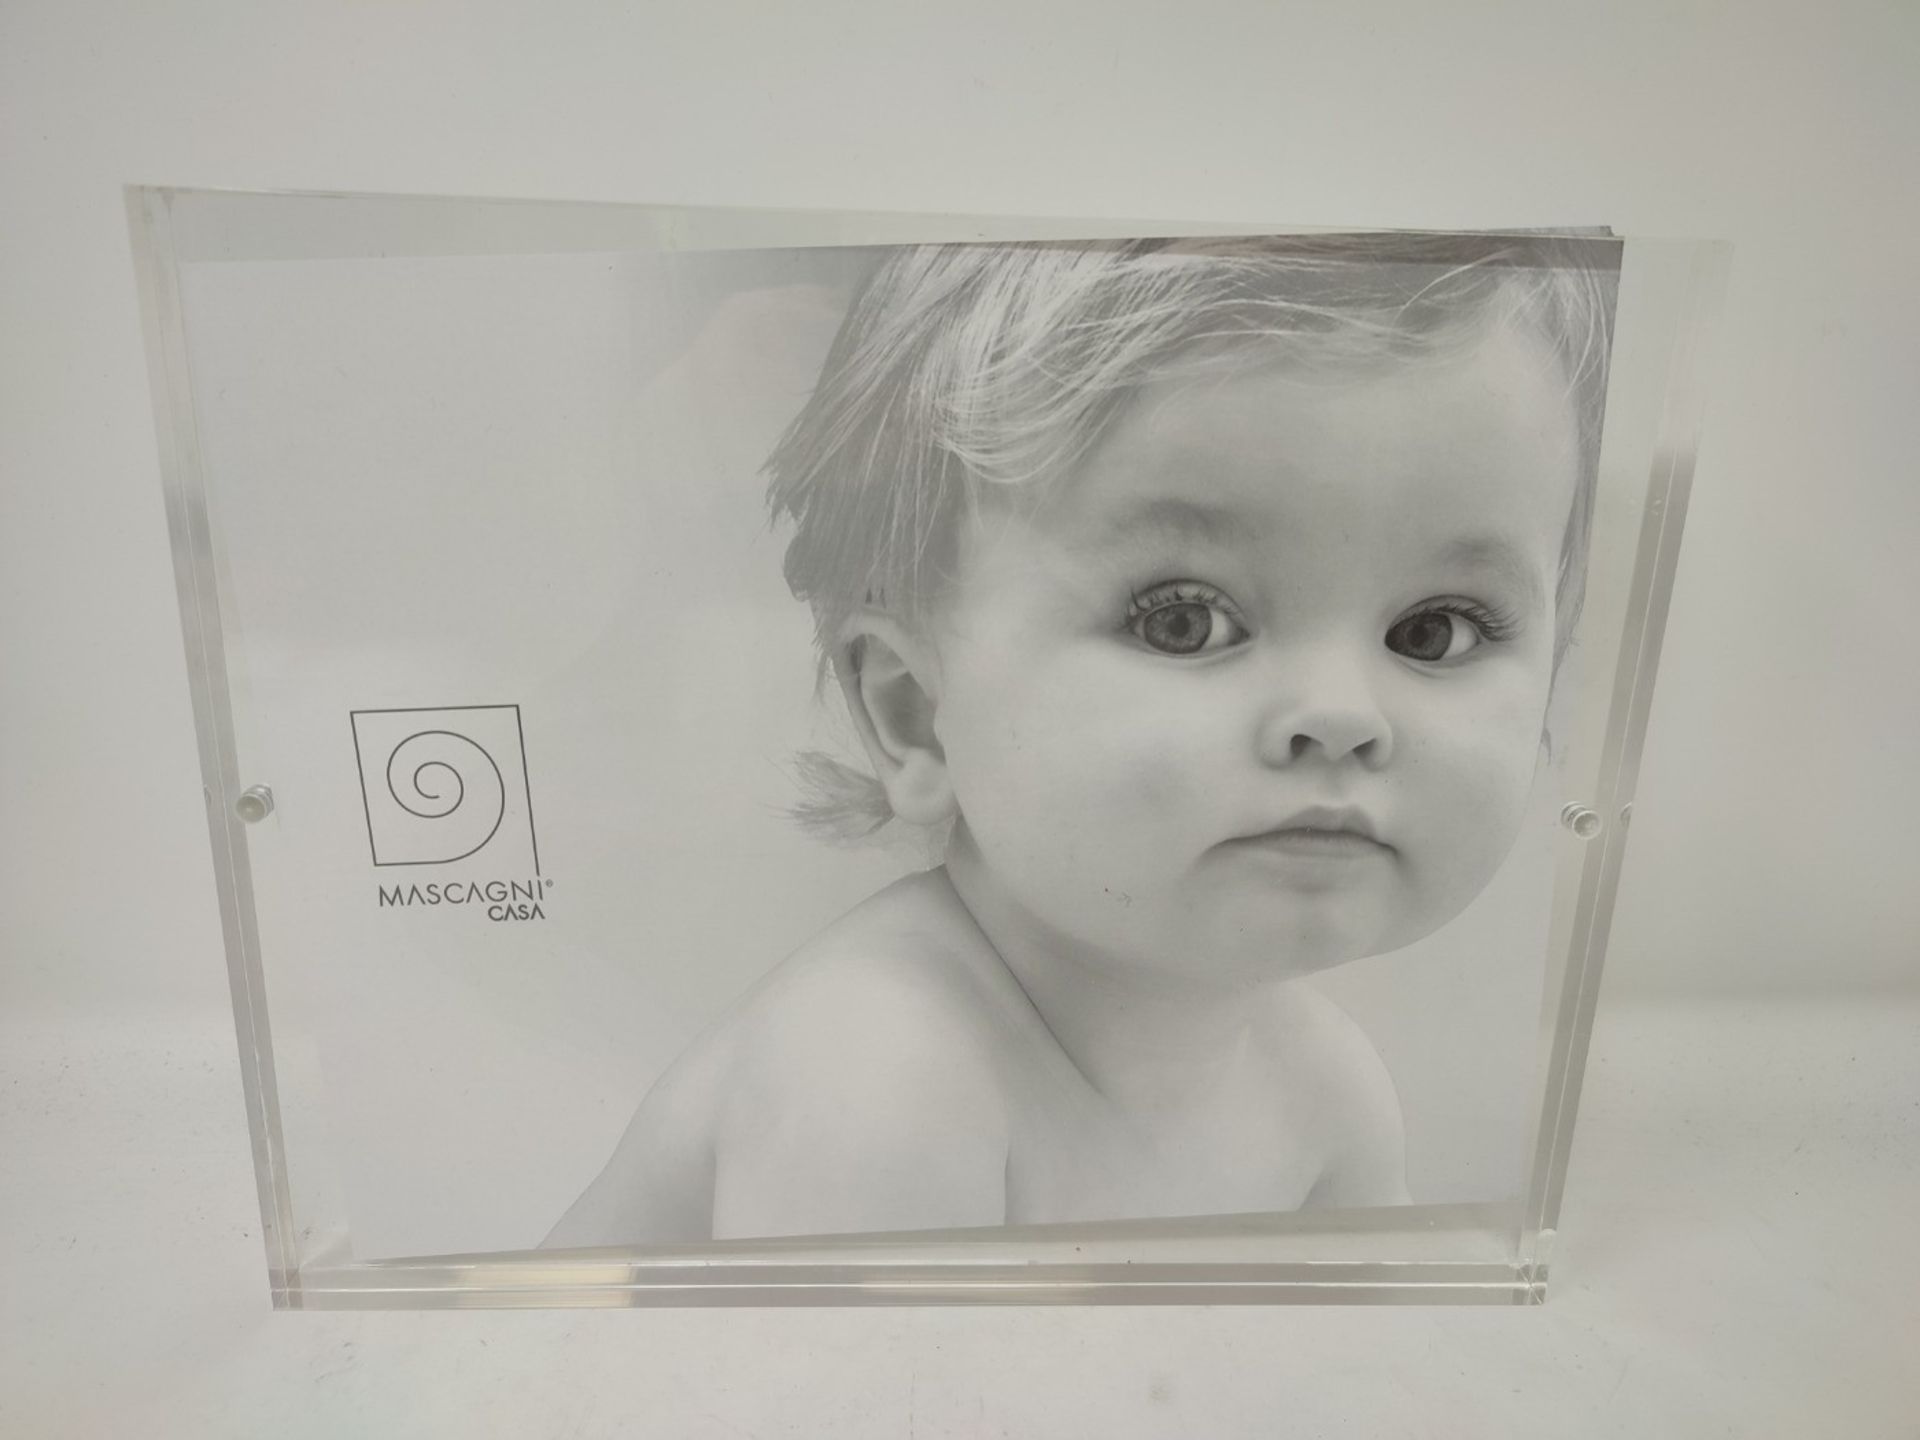 Mascagni M215 Transparent Floor Display Backlit - Frame, Acrylic, Transparent, Floo - Image 3 of 3